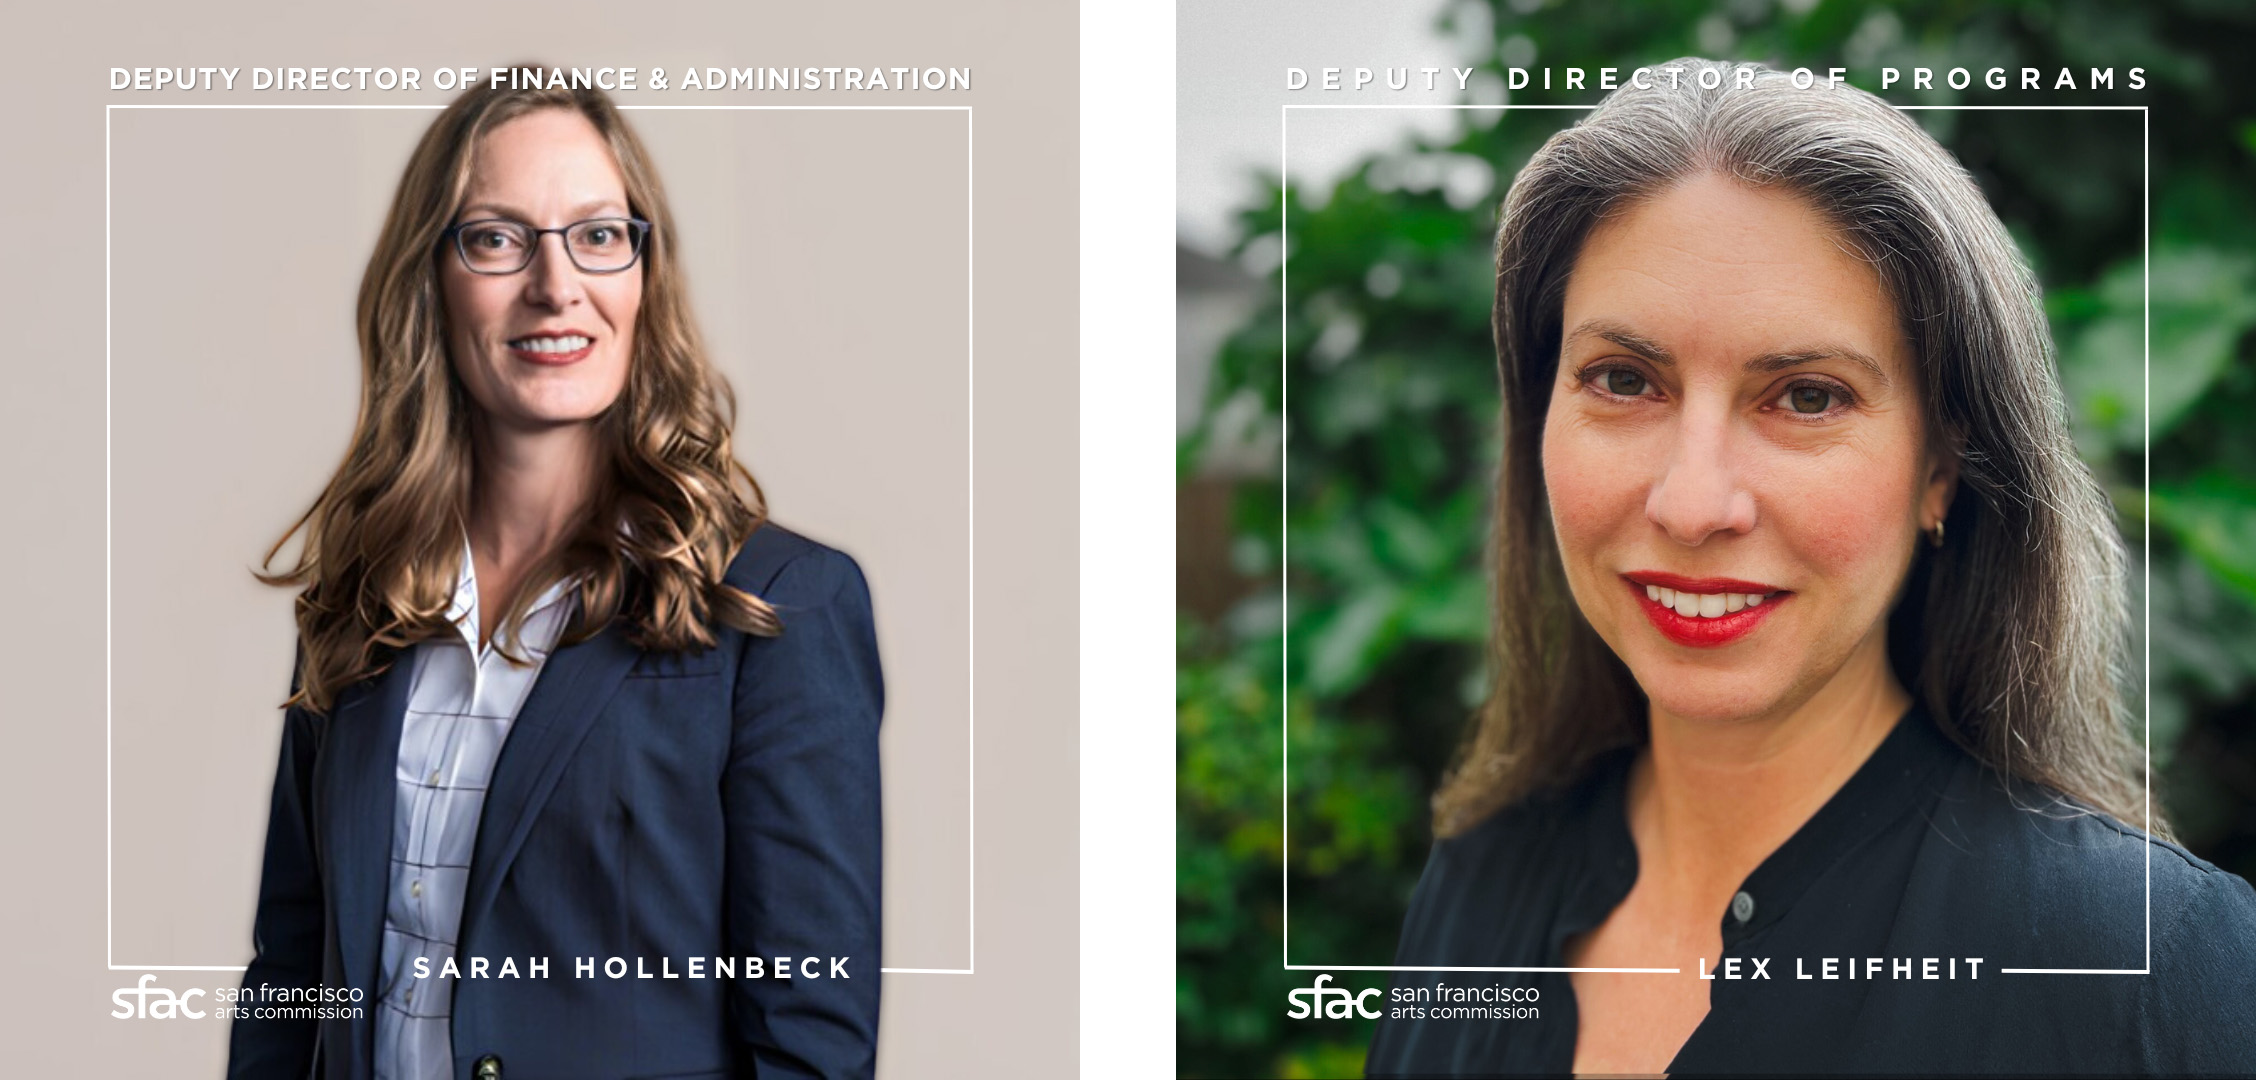 Deputy Director of Finance & Administration Sarah Hollenbeck and Deputy Director of Programs, Lex Leifheit